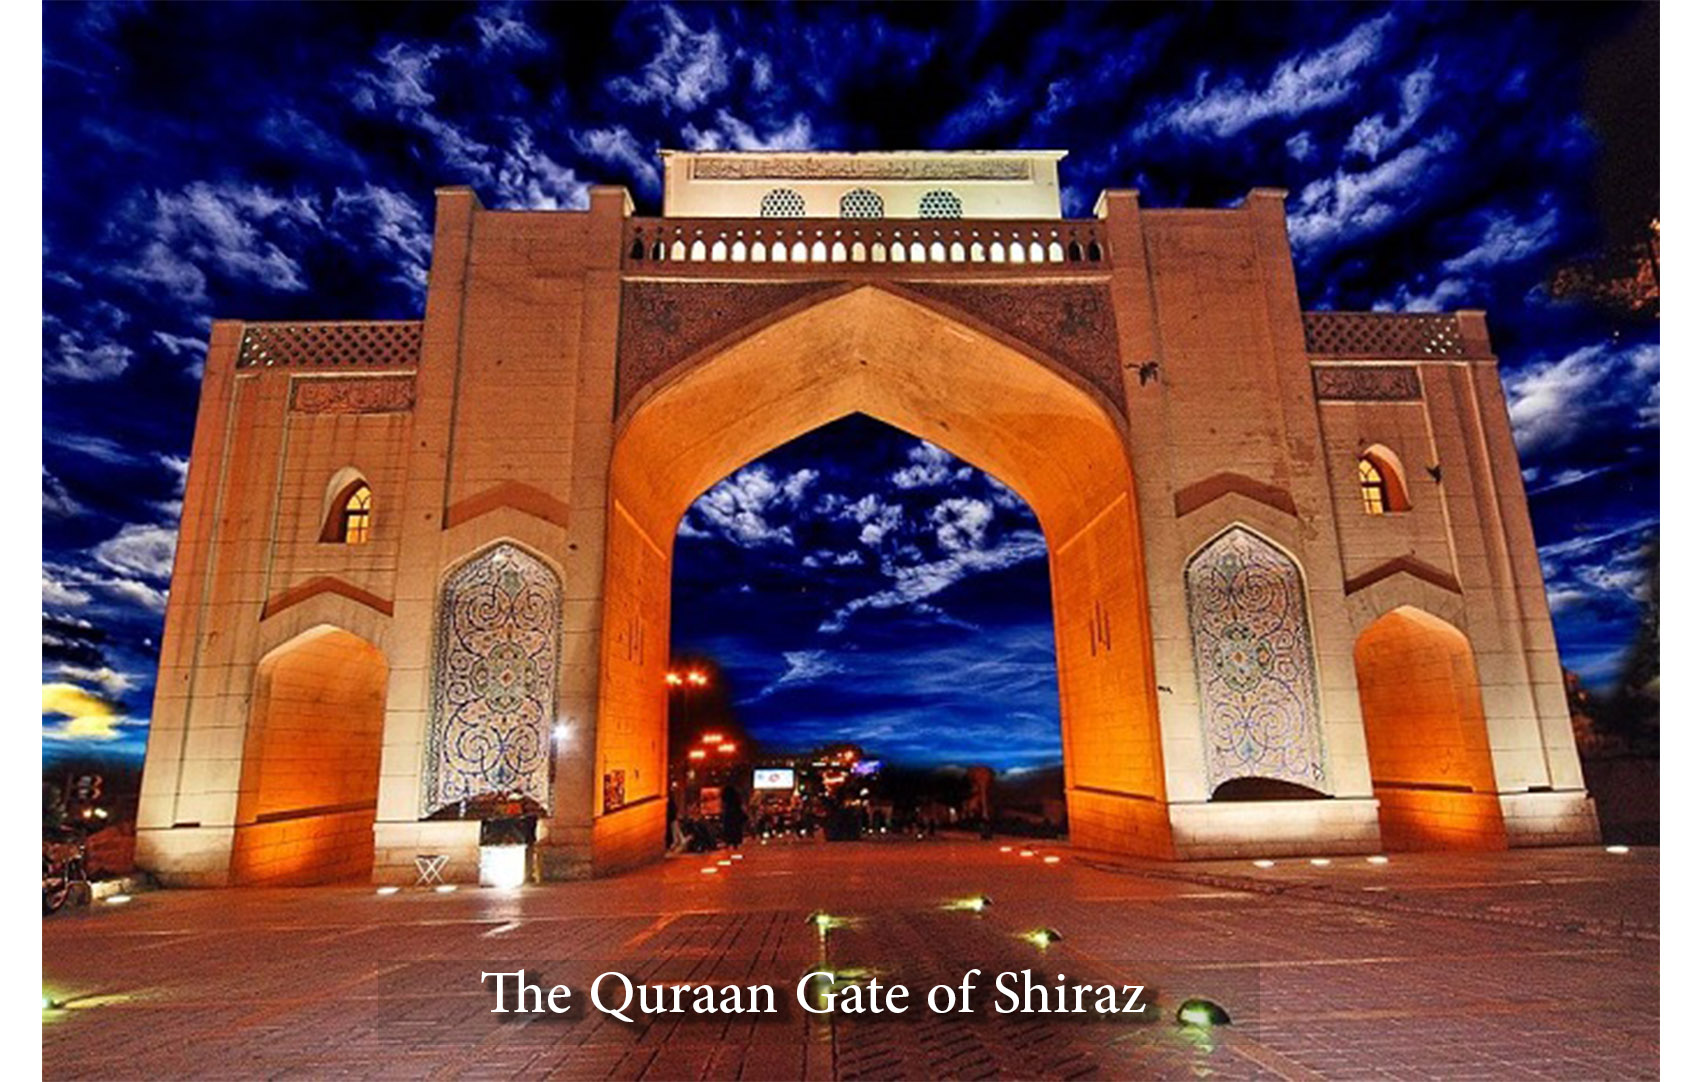 The Quraan Gate of Shiraz